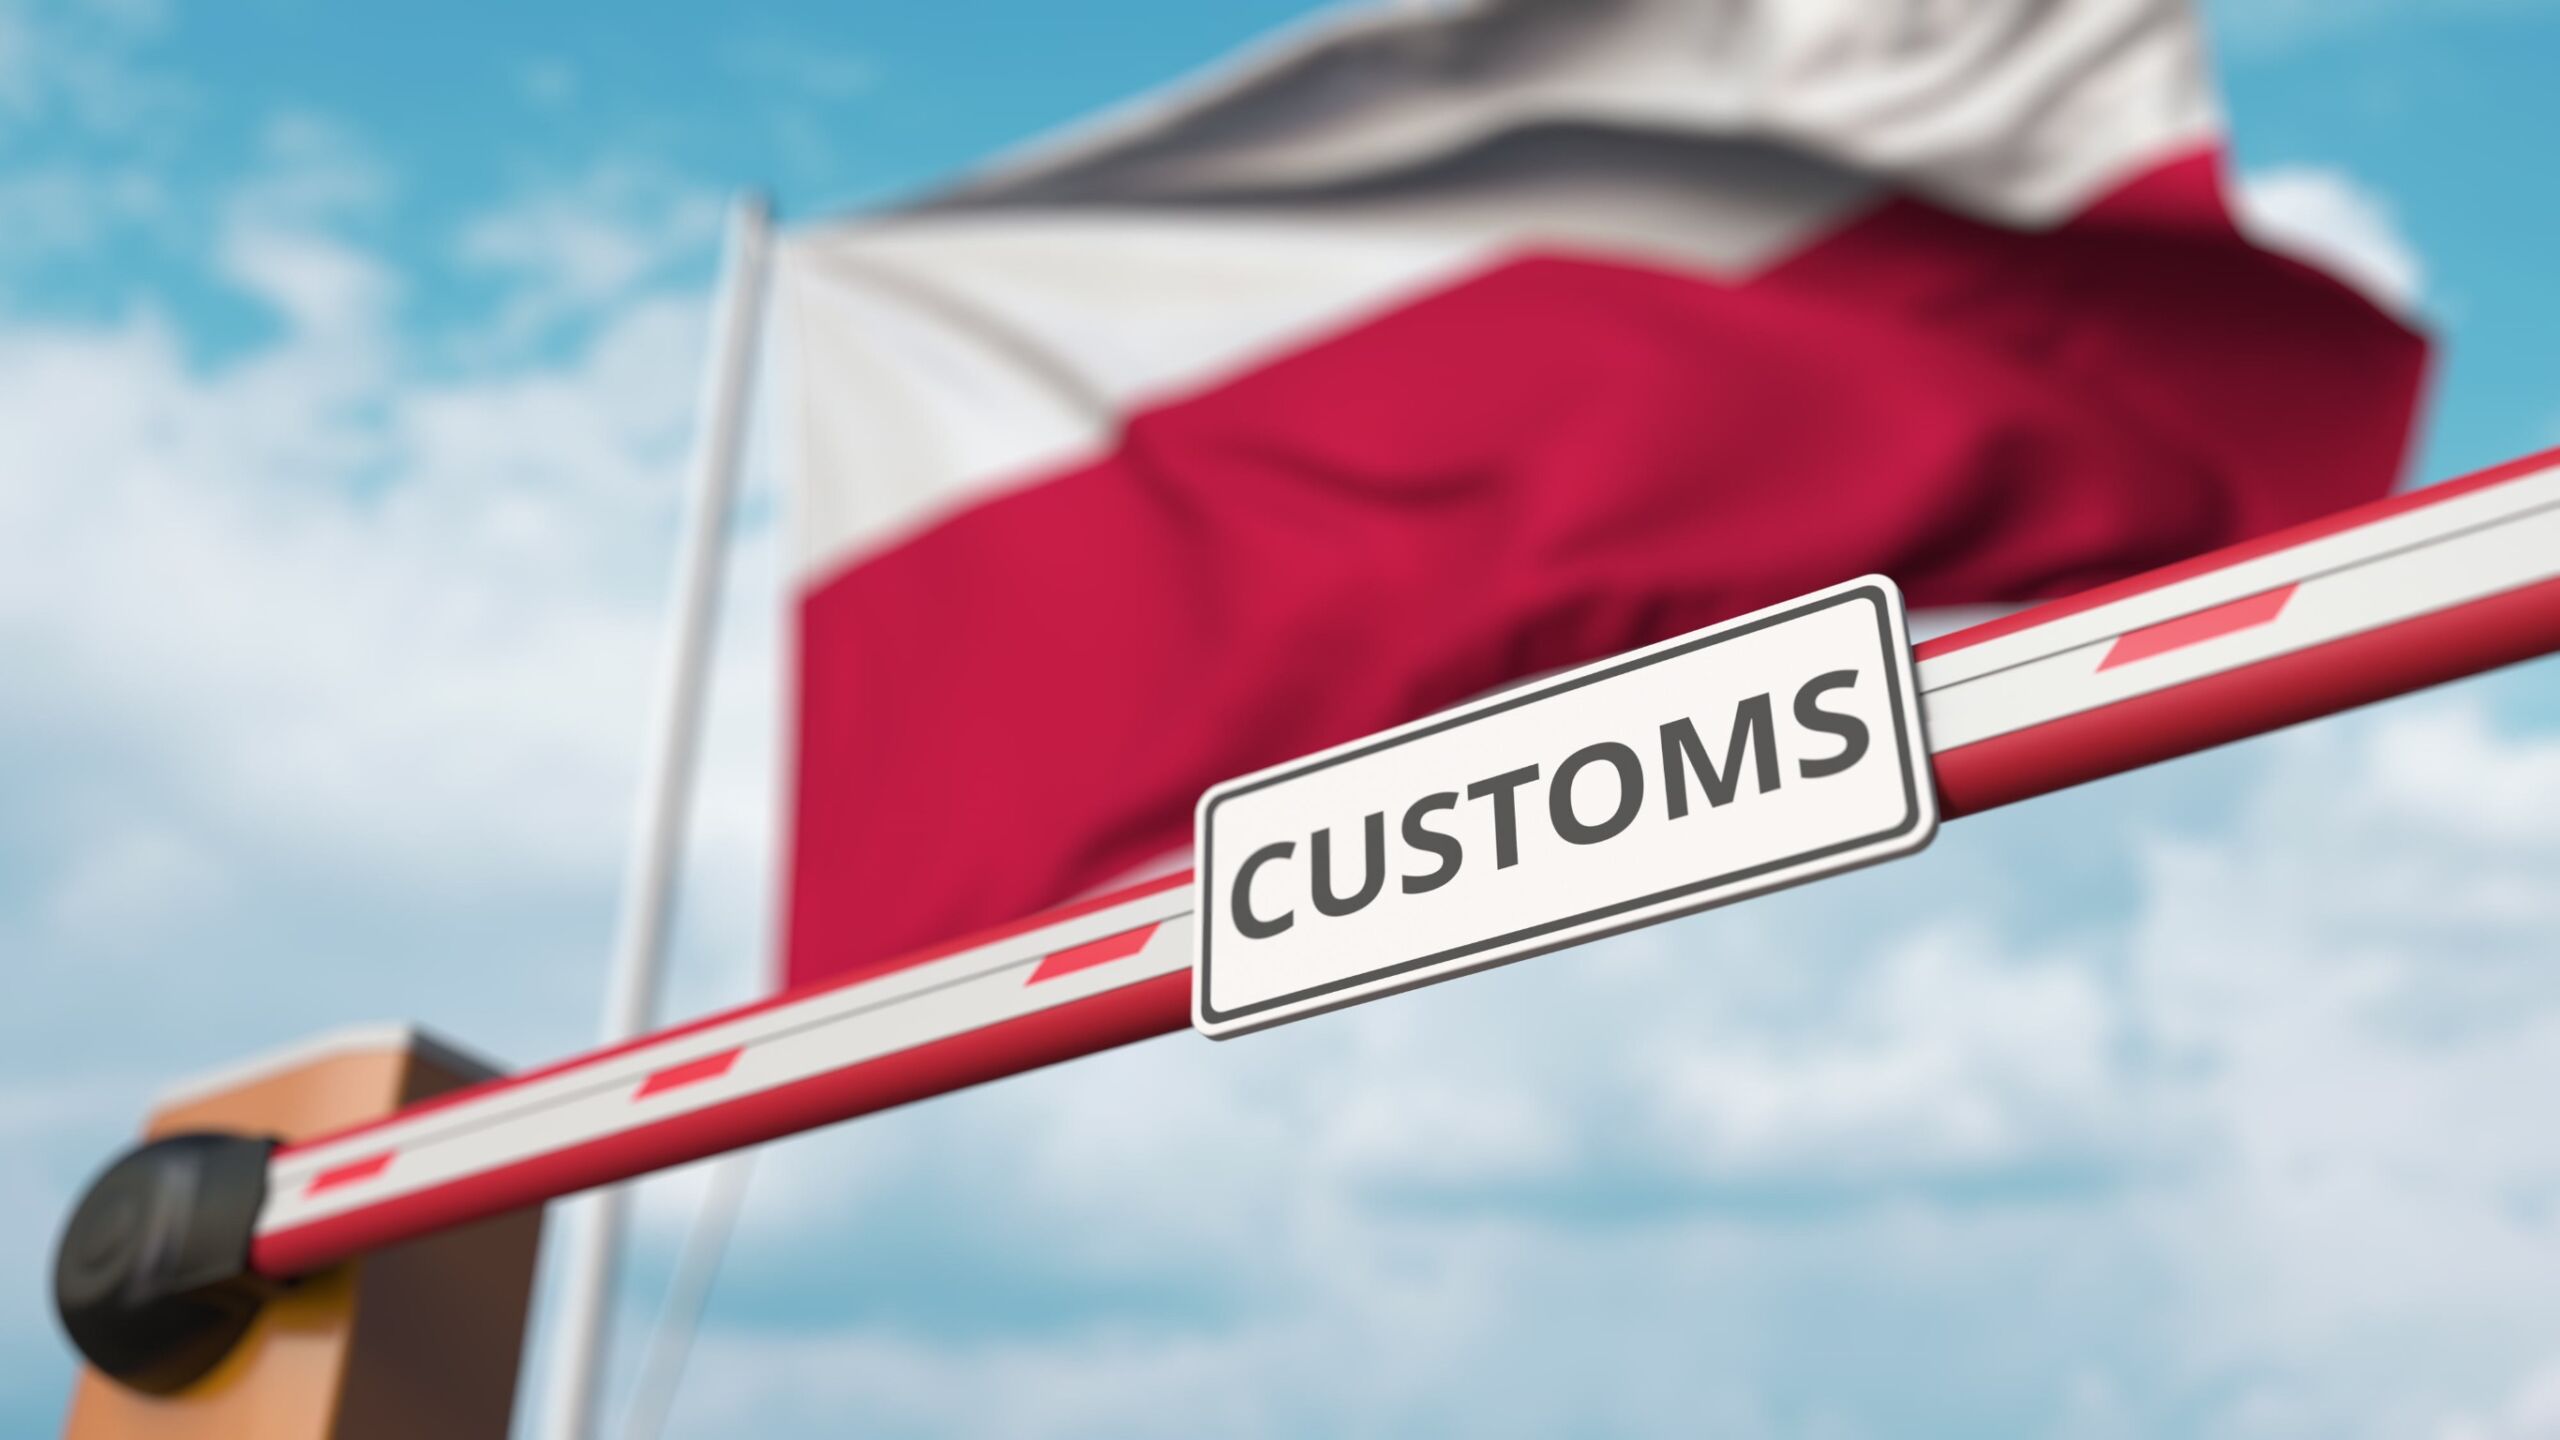 Szlaban z napisem "Customs" na tle flagi Polski